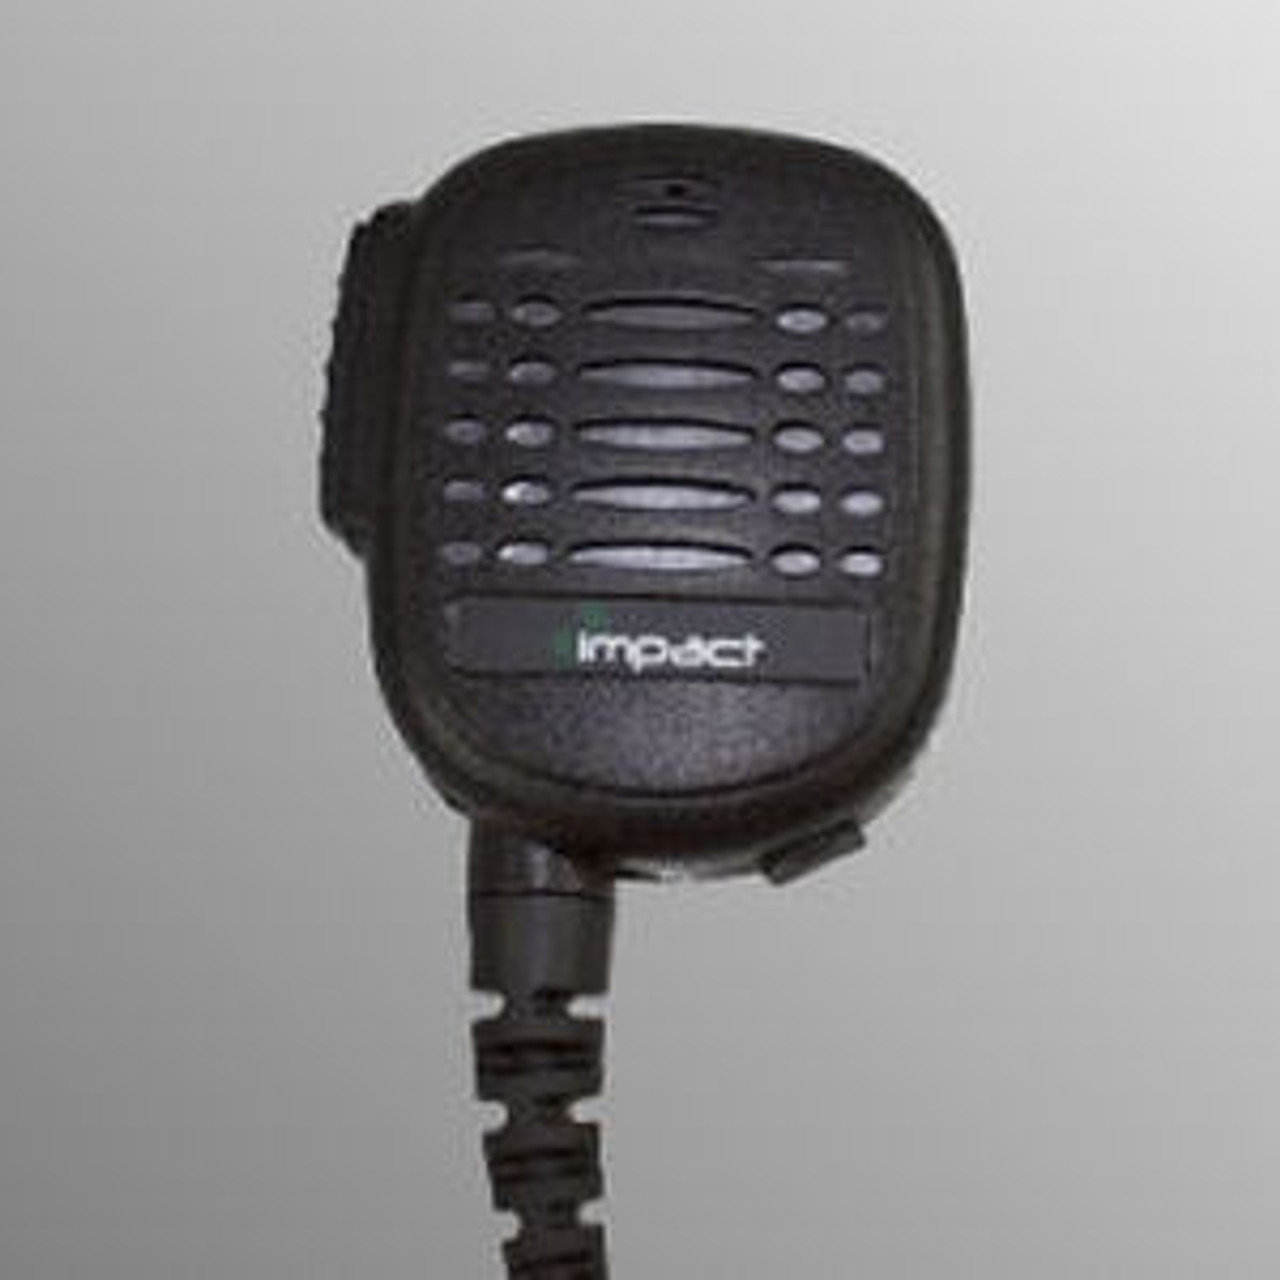 ICOM IC-F9021T Noise Canceling Speaker Mic.